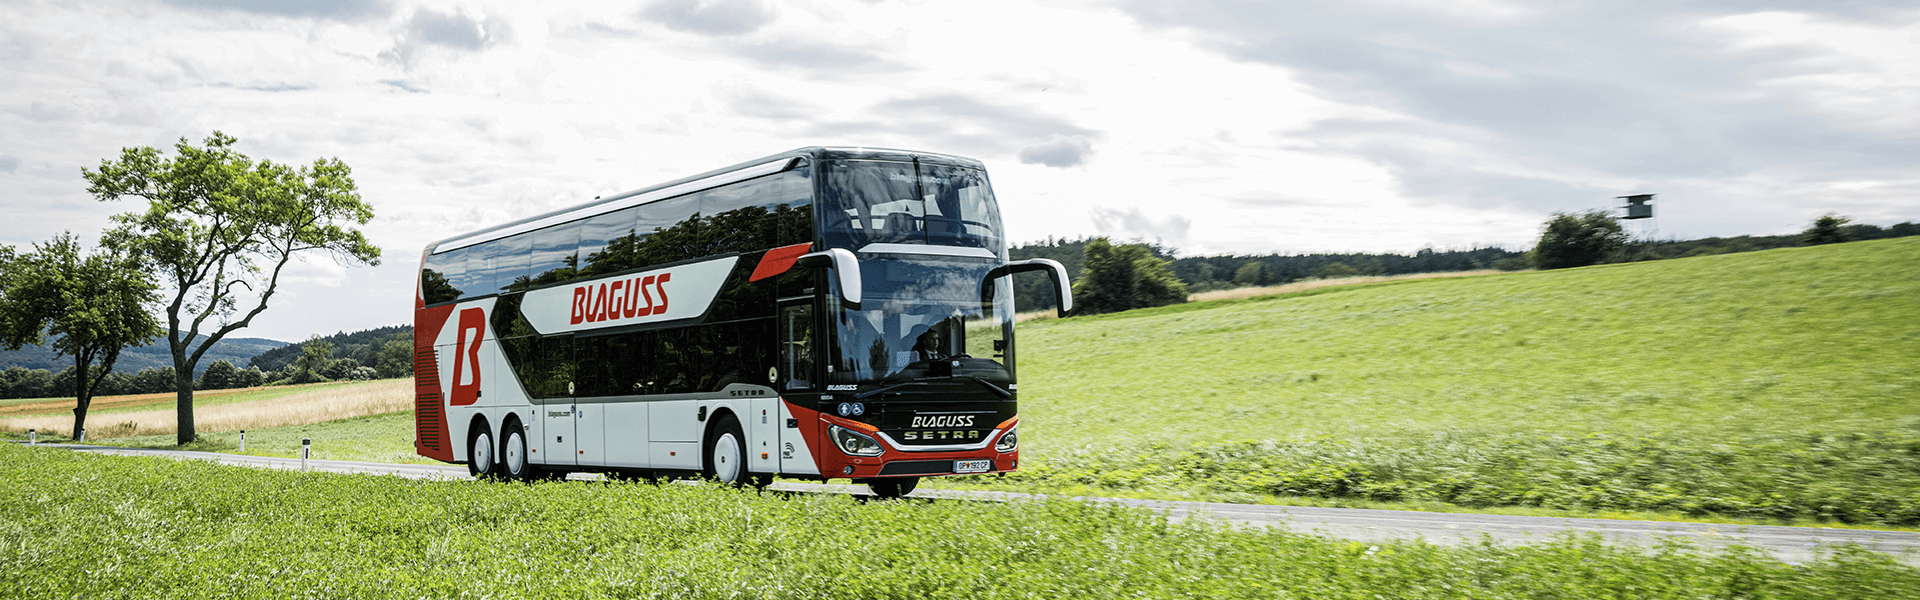 Blaguss Stockbus 80-Sitzer